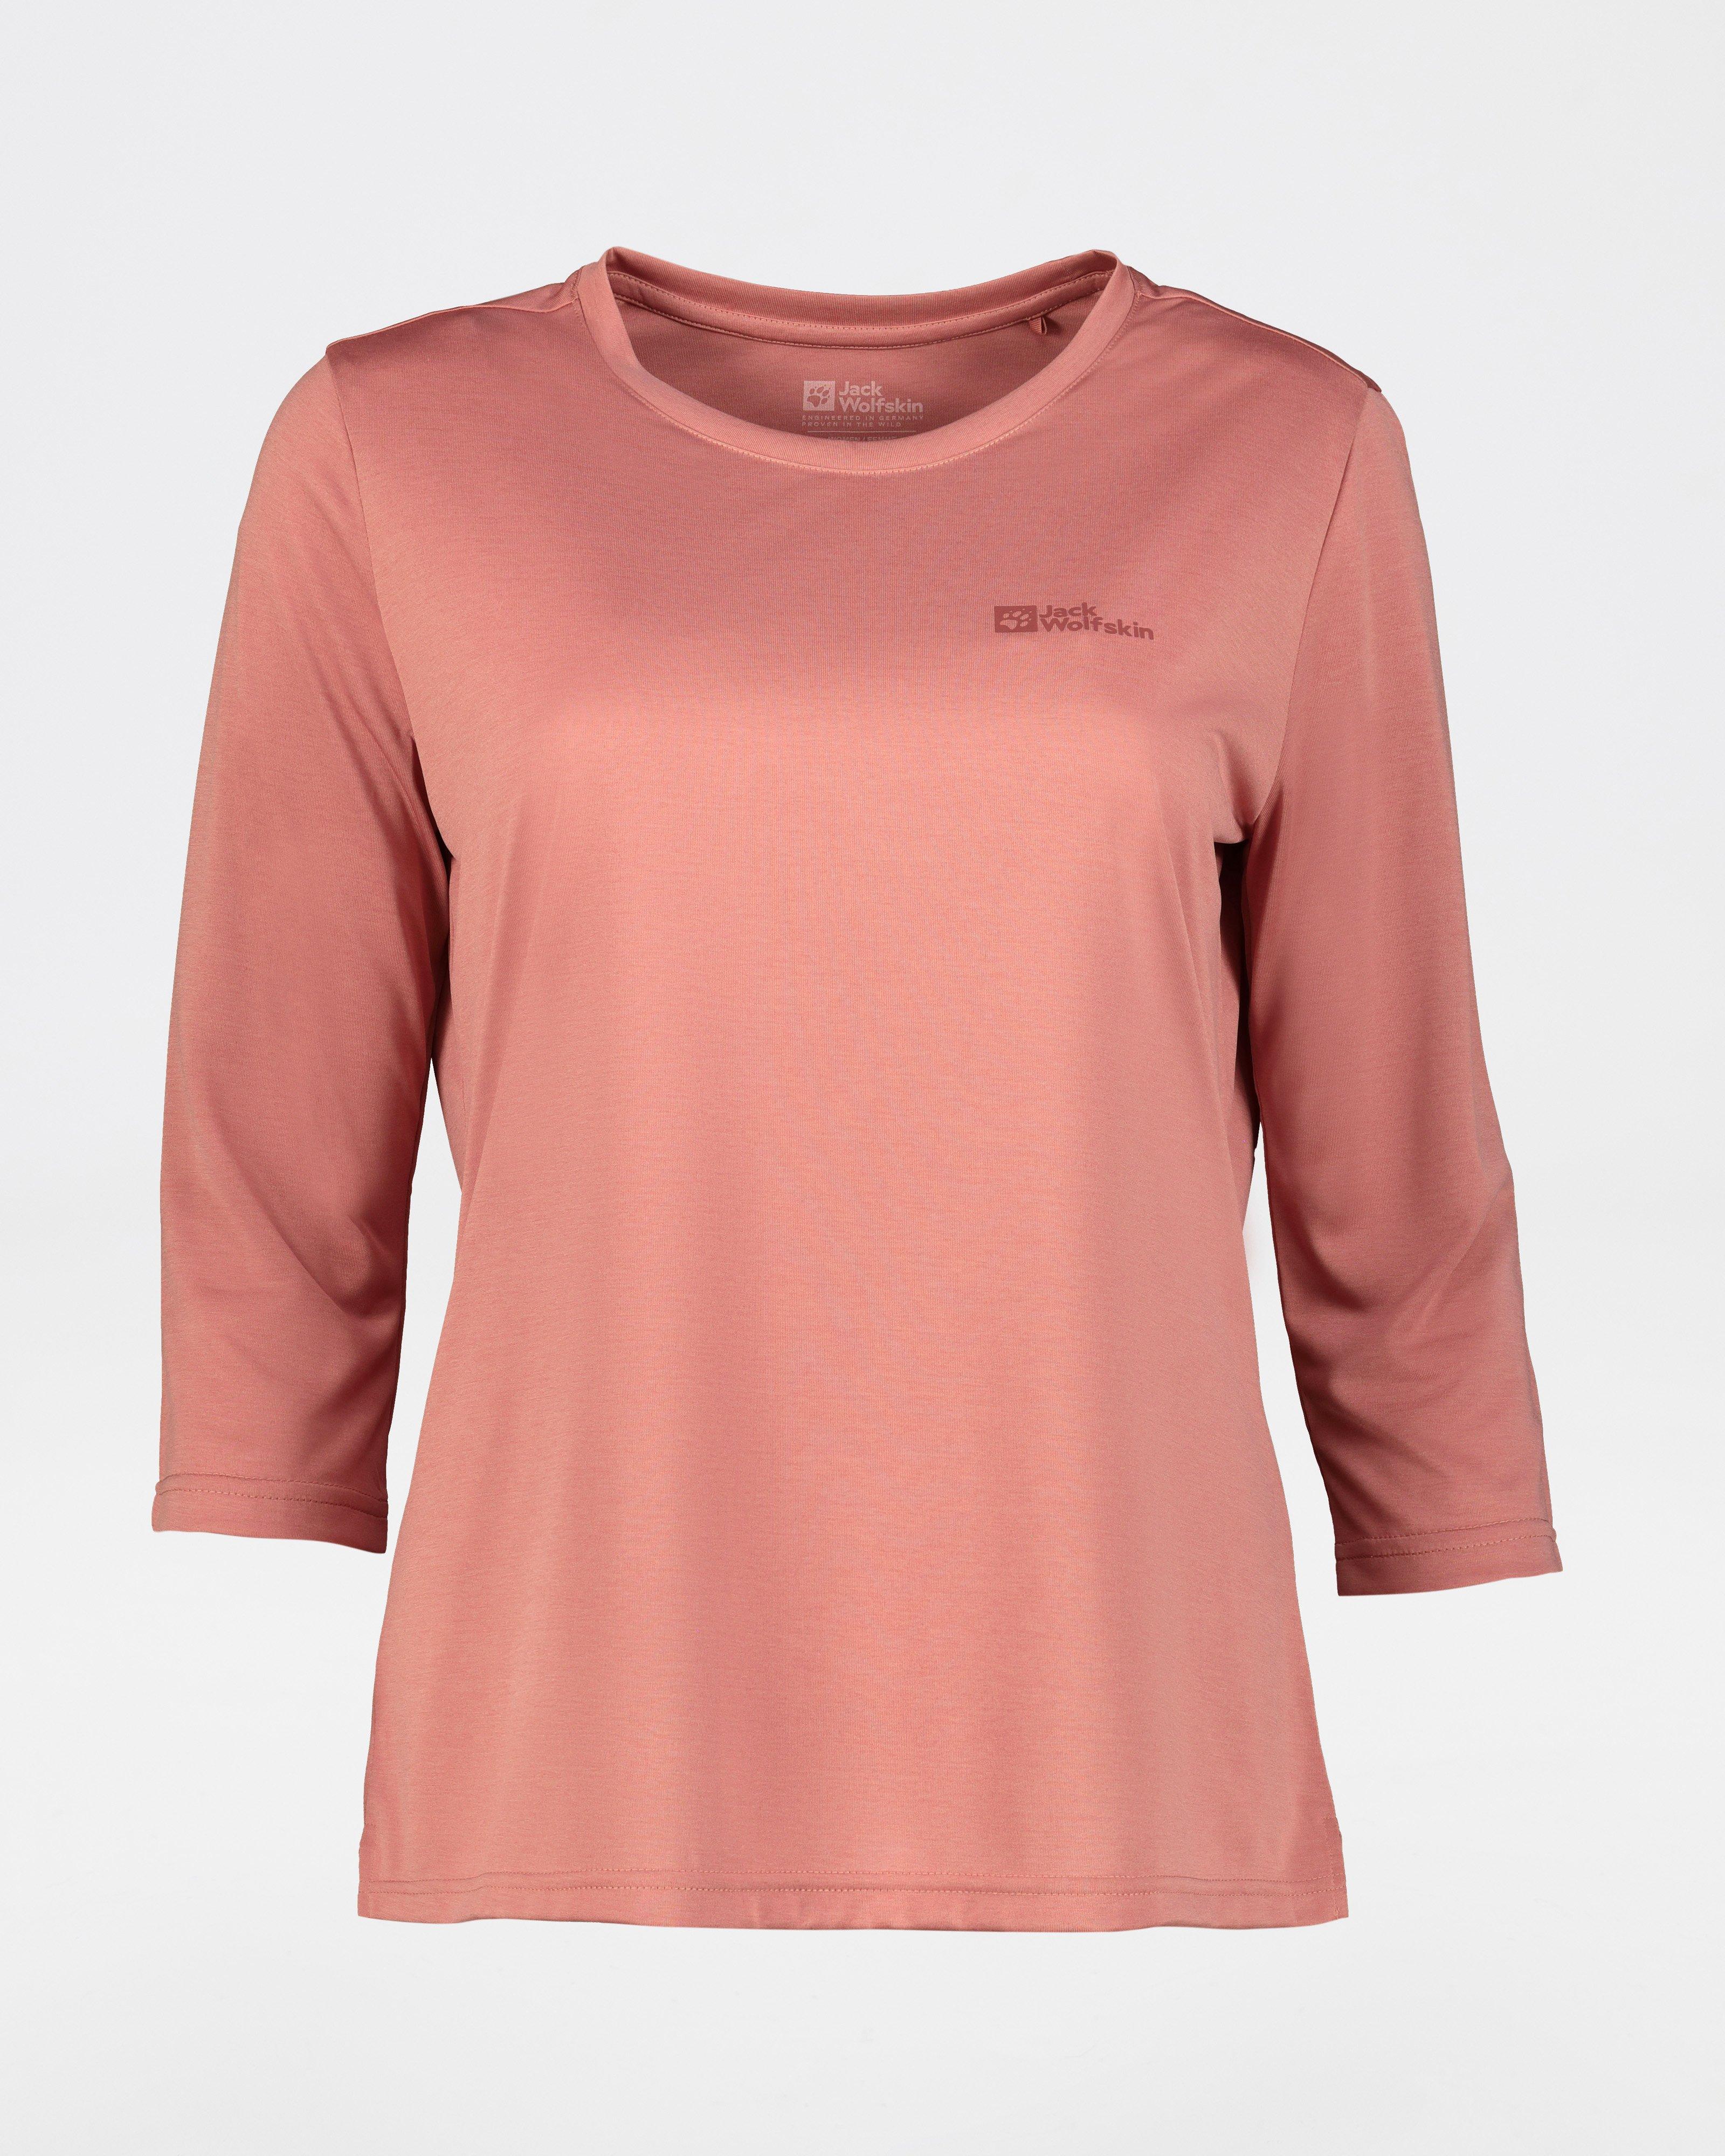 Jack Wolfskin Women’s Crosstail Active T-shirt -  Rose